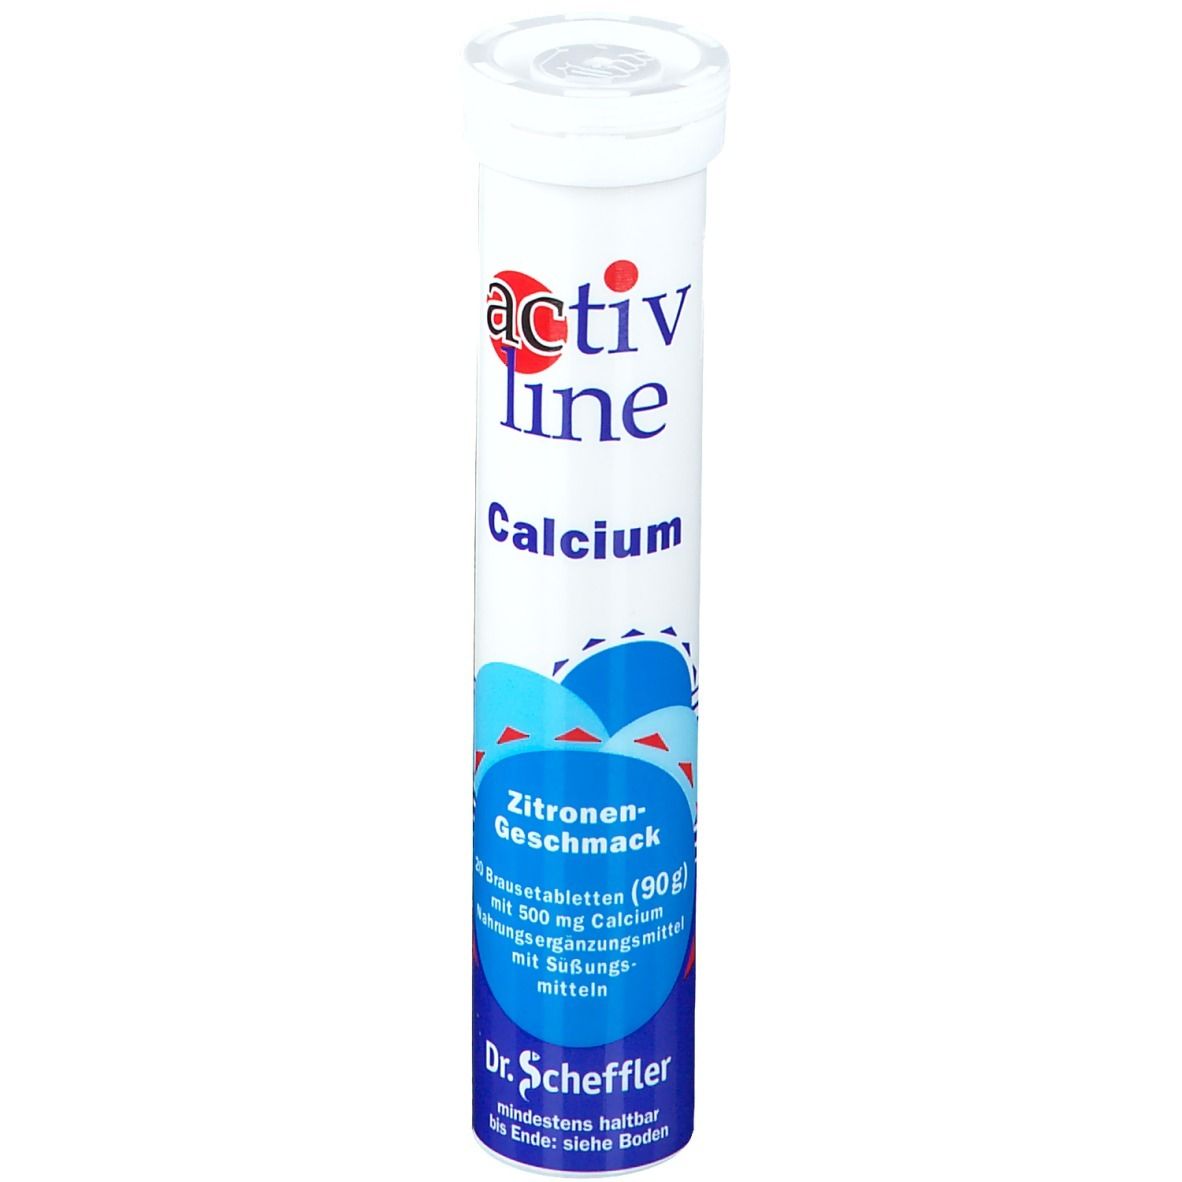 Image of activline Calcium Zitrone